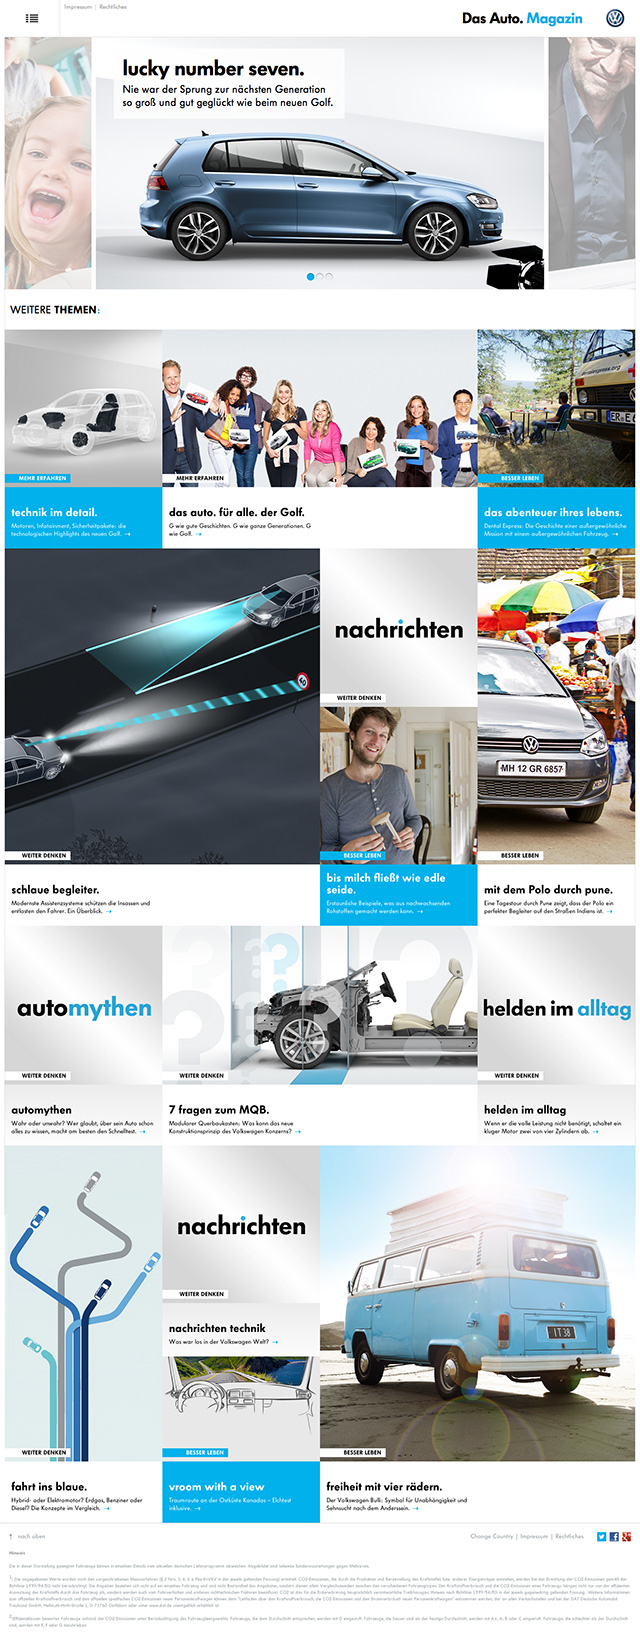 VW Das Auto Magazine Frontpage